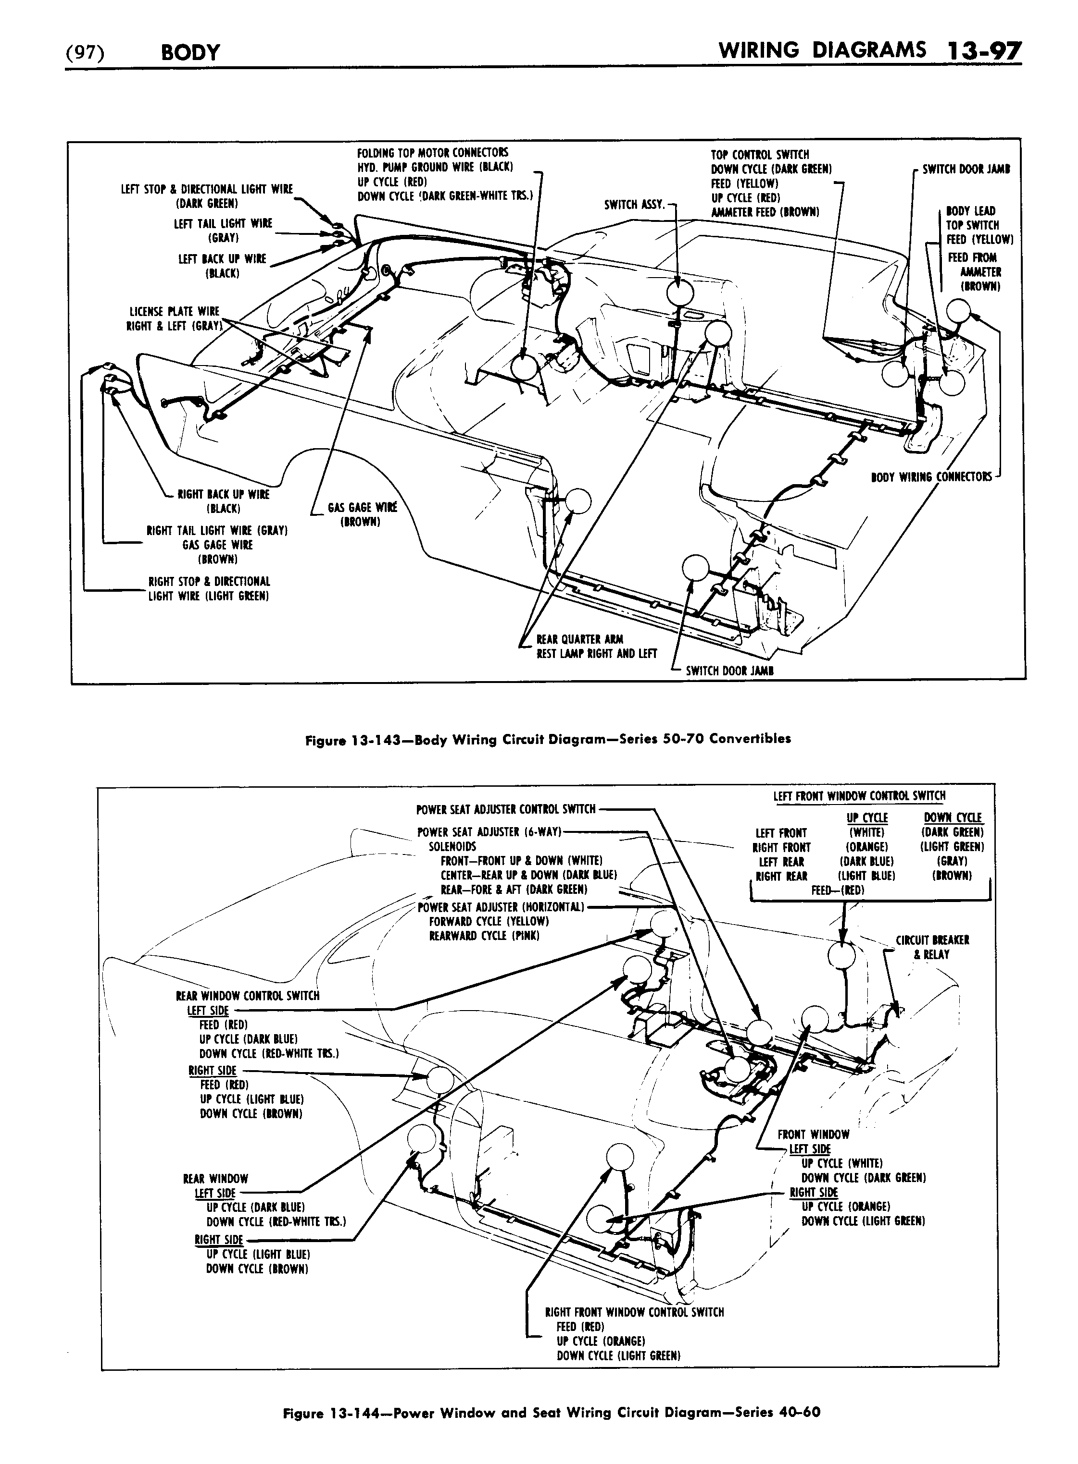 n_1957 Buick Body Service Manual-099-099.jpg